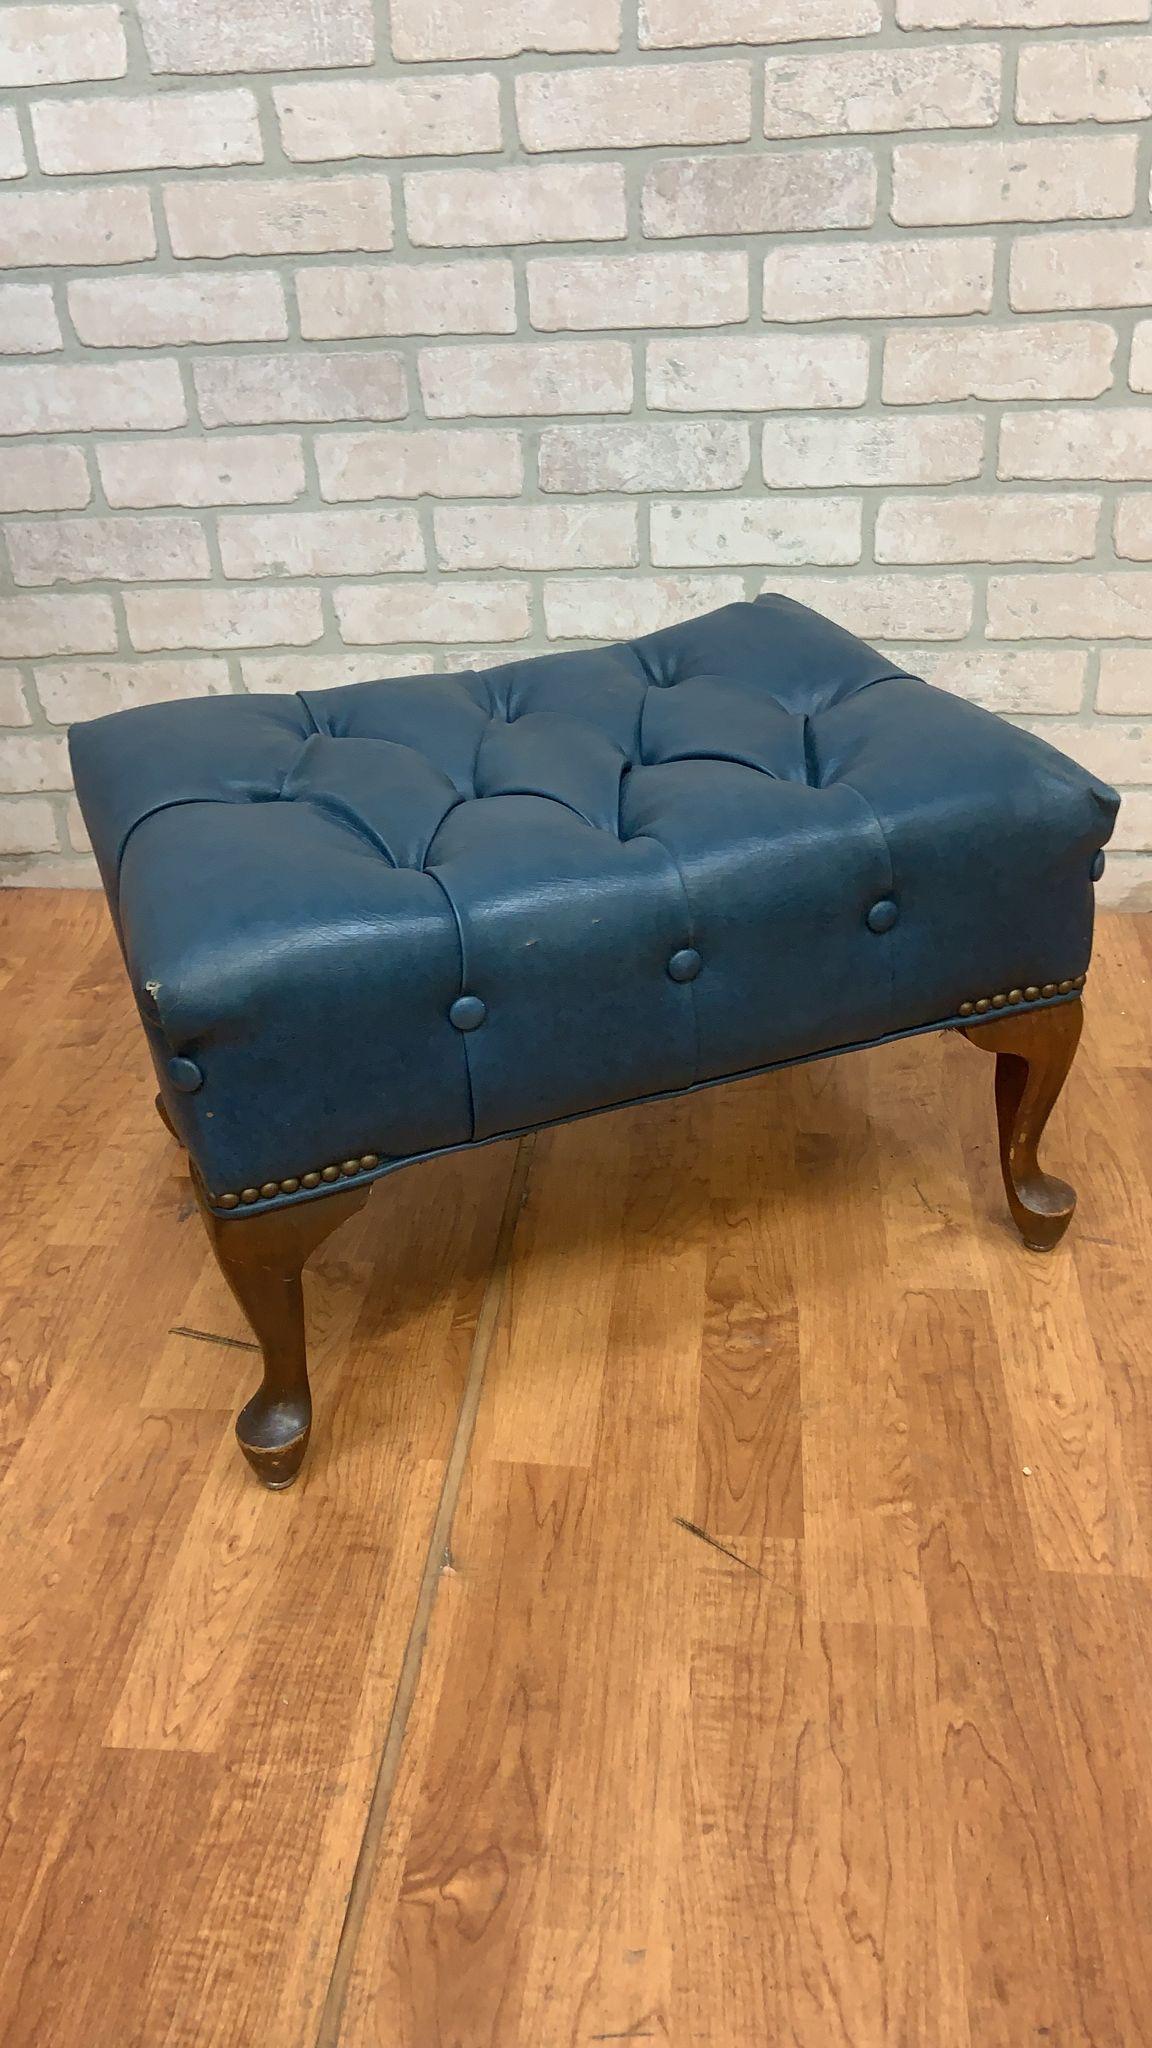 Regency Vintage Sleepy Hollow Blue Tufted Chair and Ottoman - 2 Piece Set